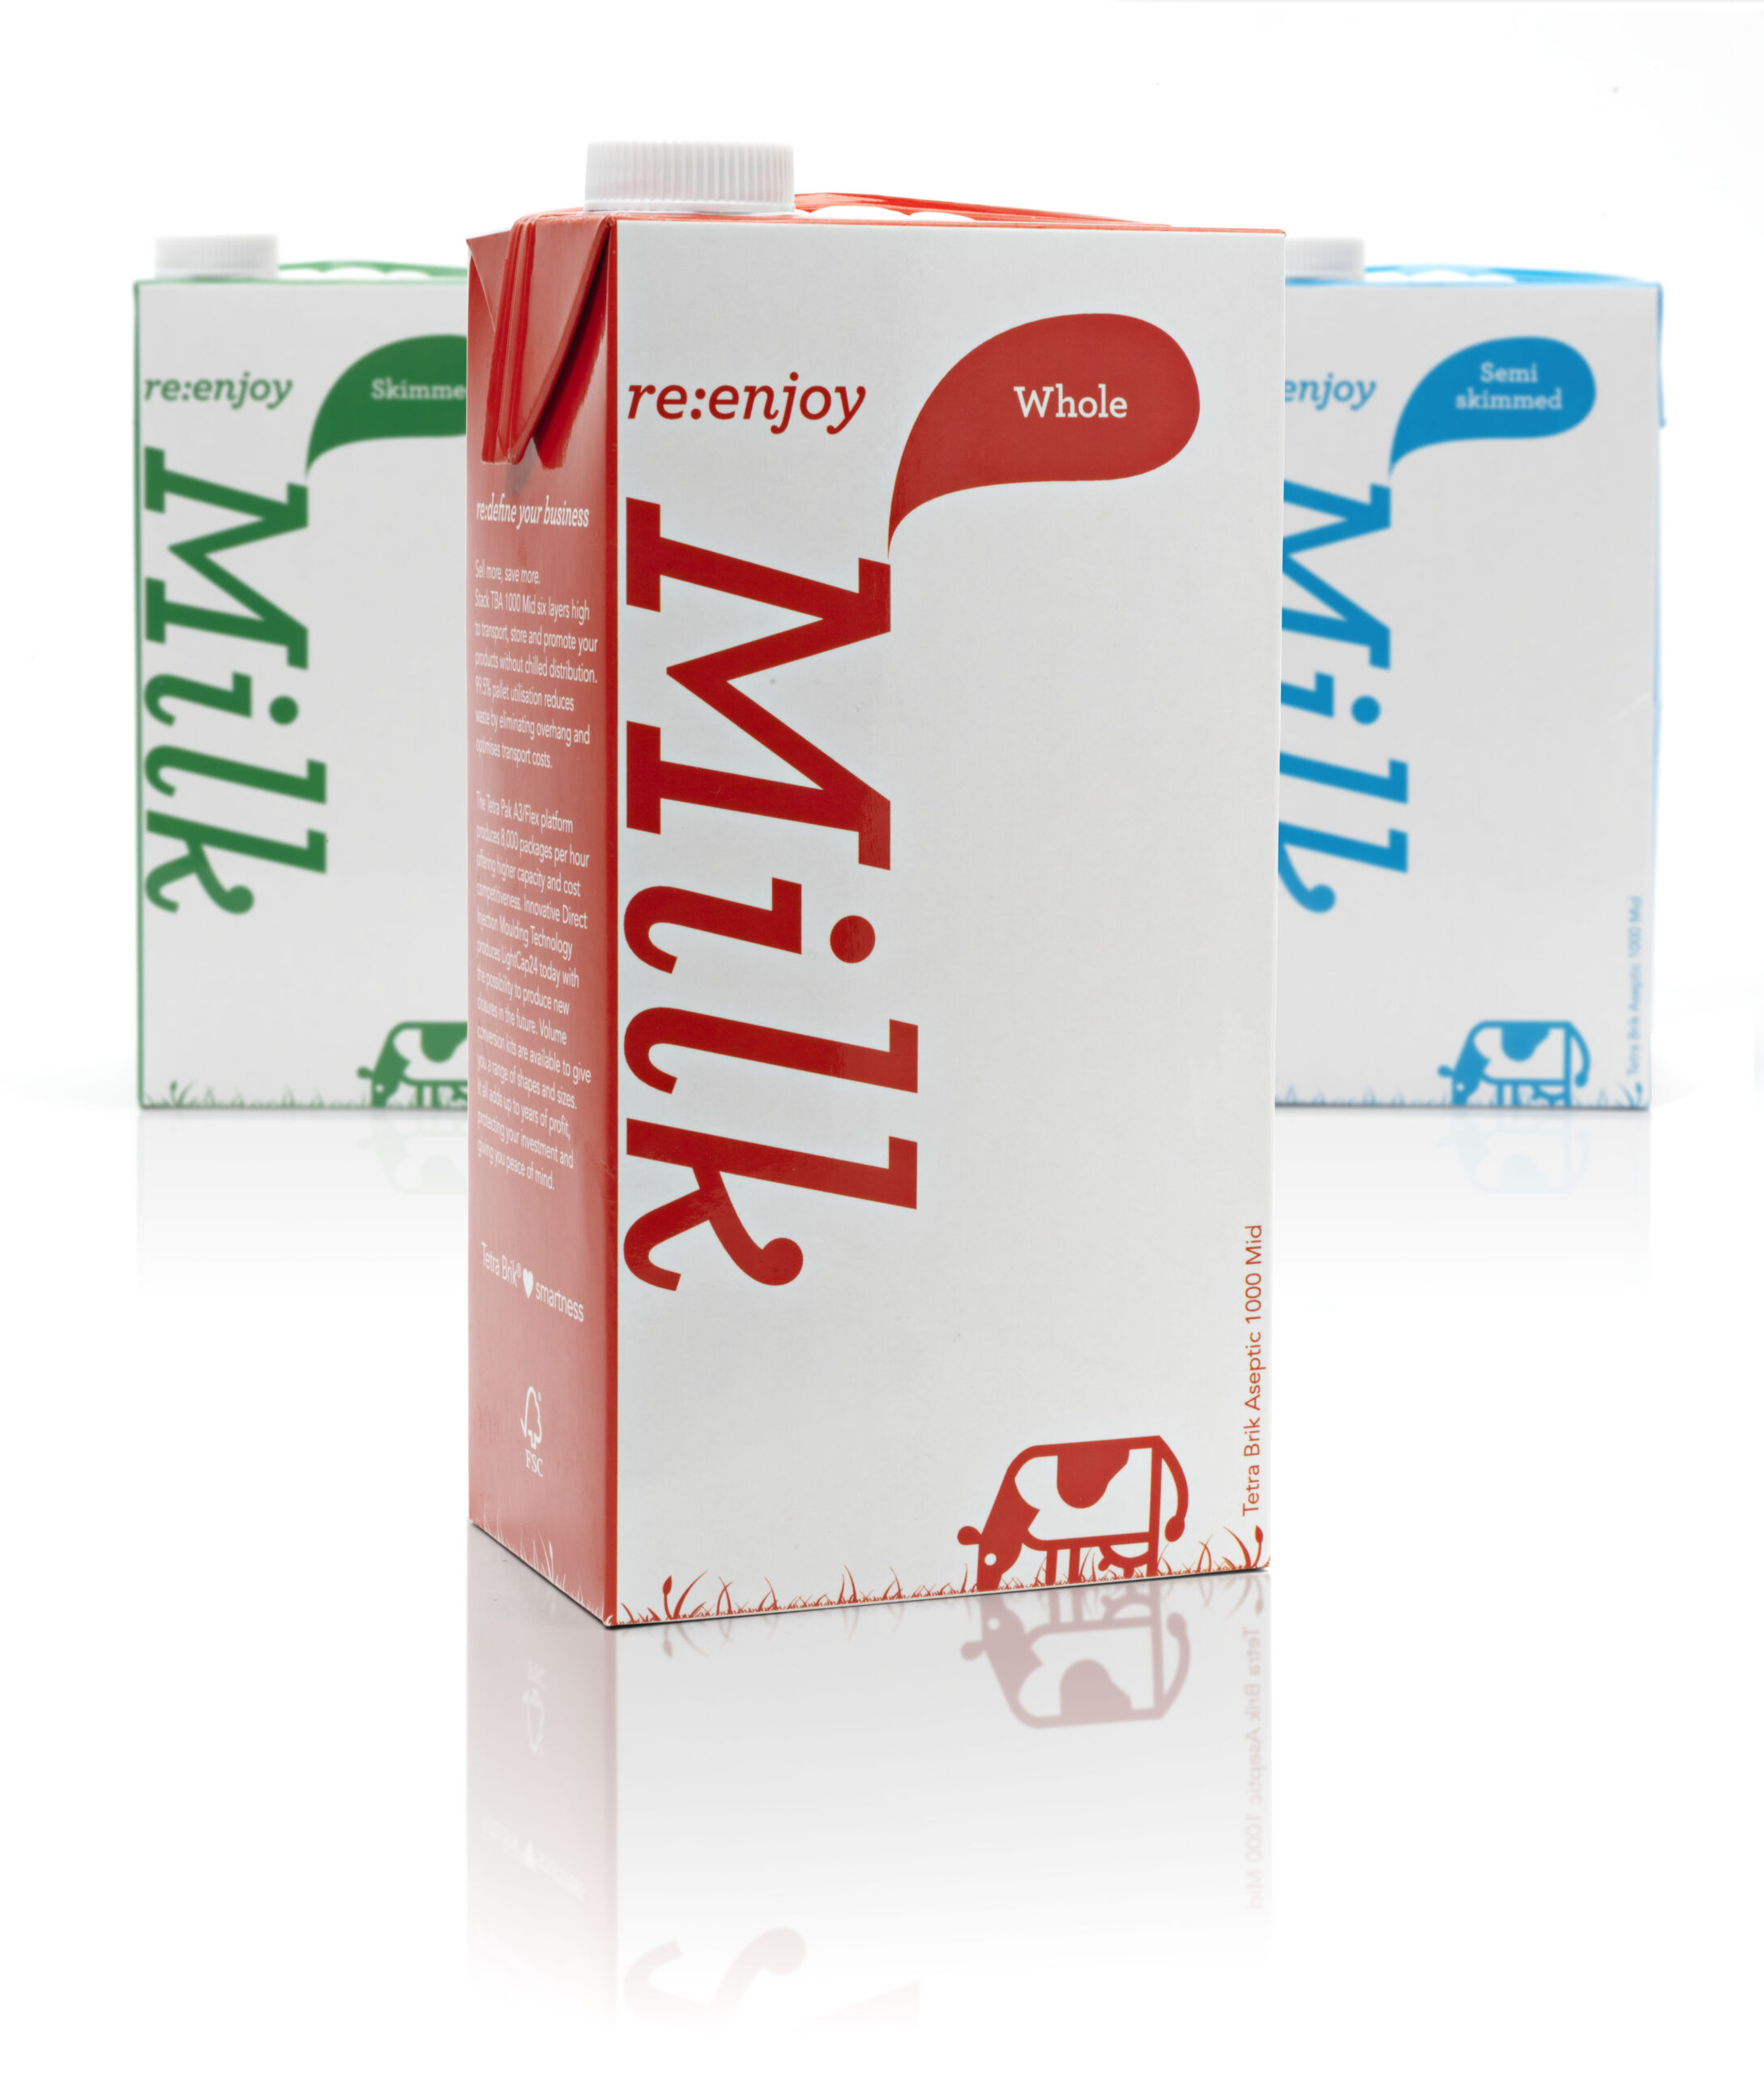 Tetra Brik Aseptic Mid LightCap 24 Milk carton packages